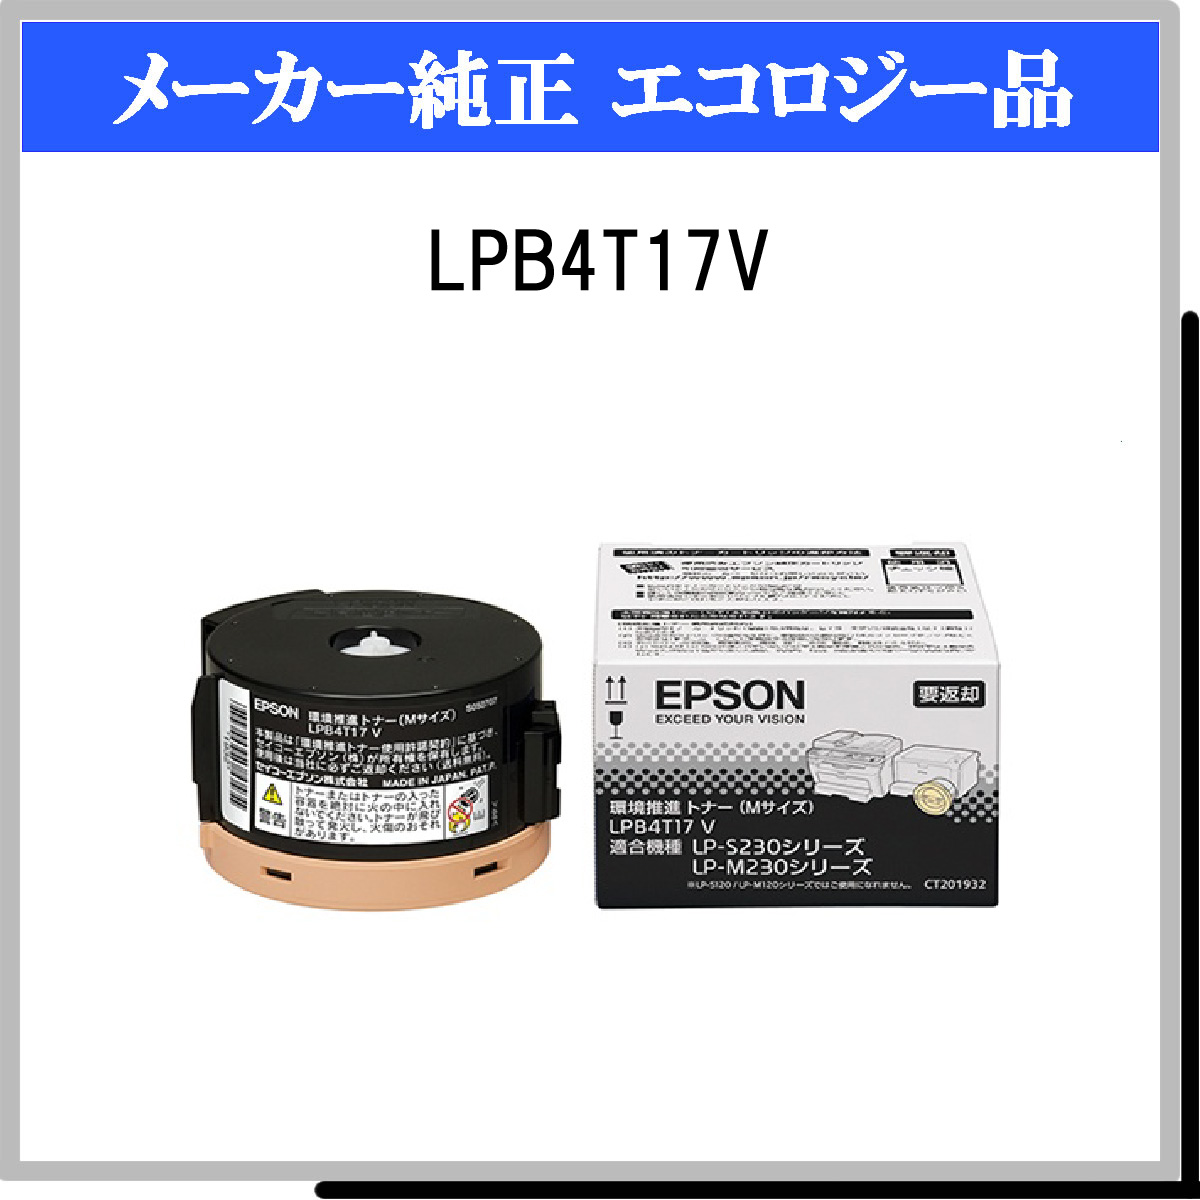 EPSON LPB4T12V 環境推進トナー 純正品 2本セット - 3